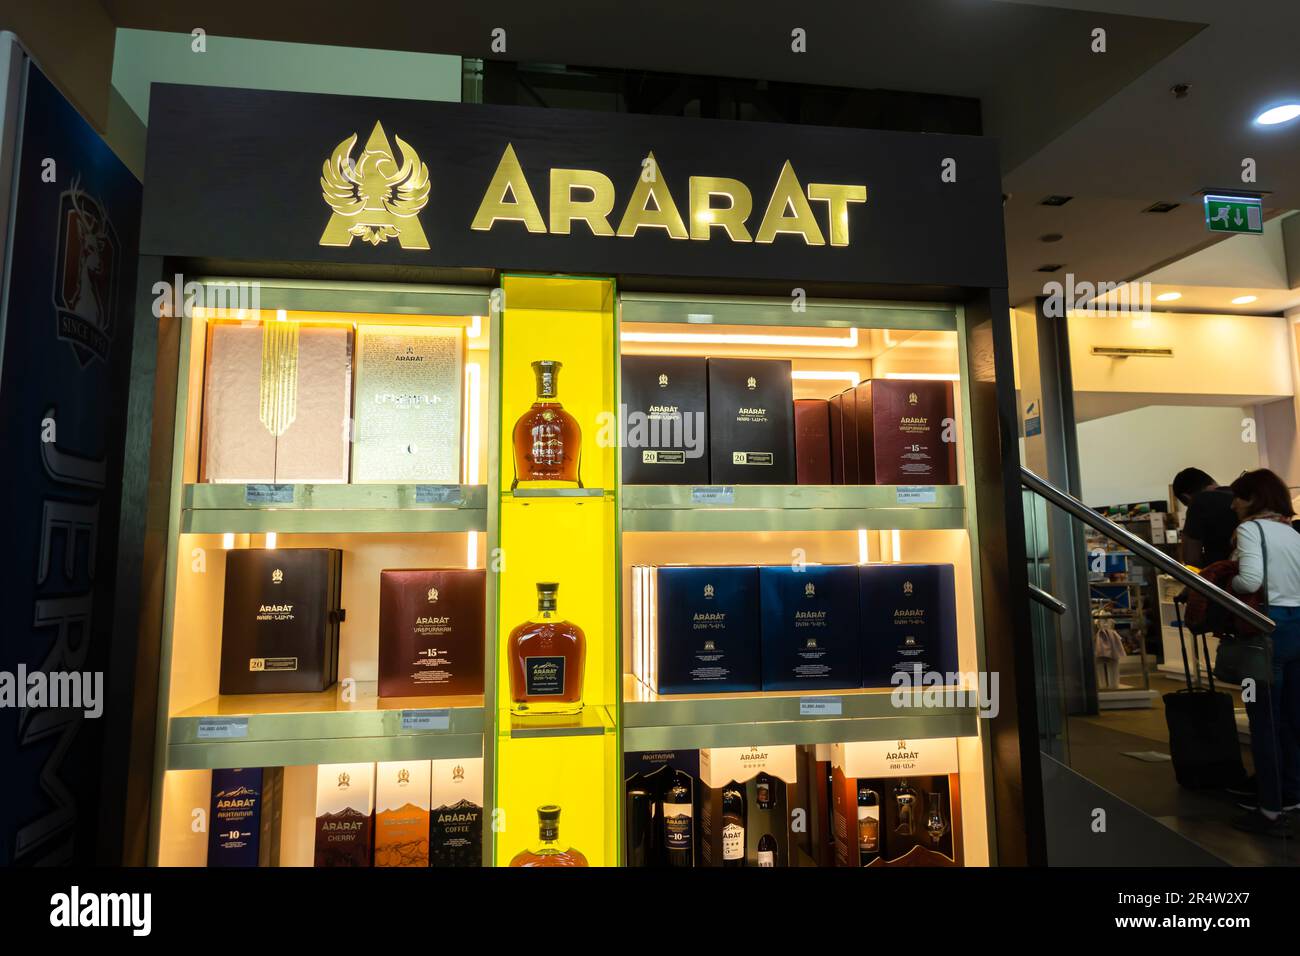 Cognac Ararat stand, display in Zvartnots Airport Armenia duty free airport shop Stock Photo